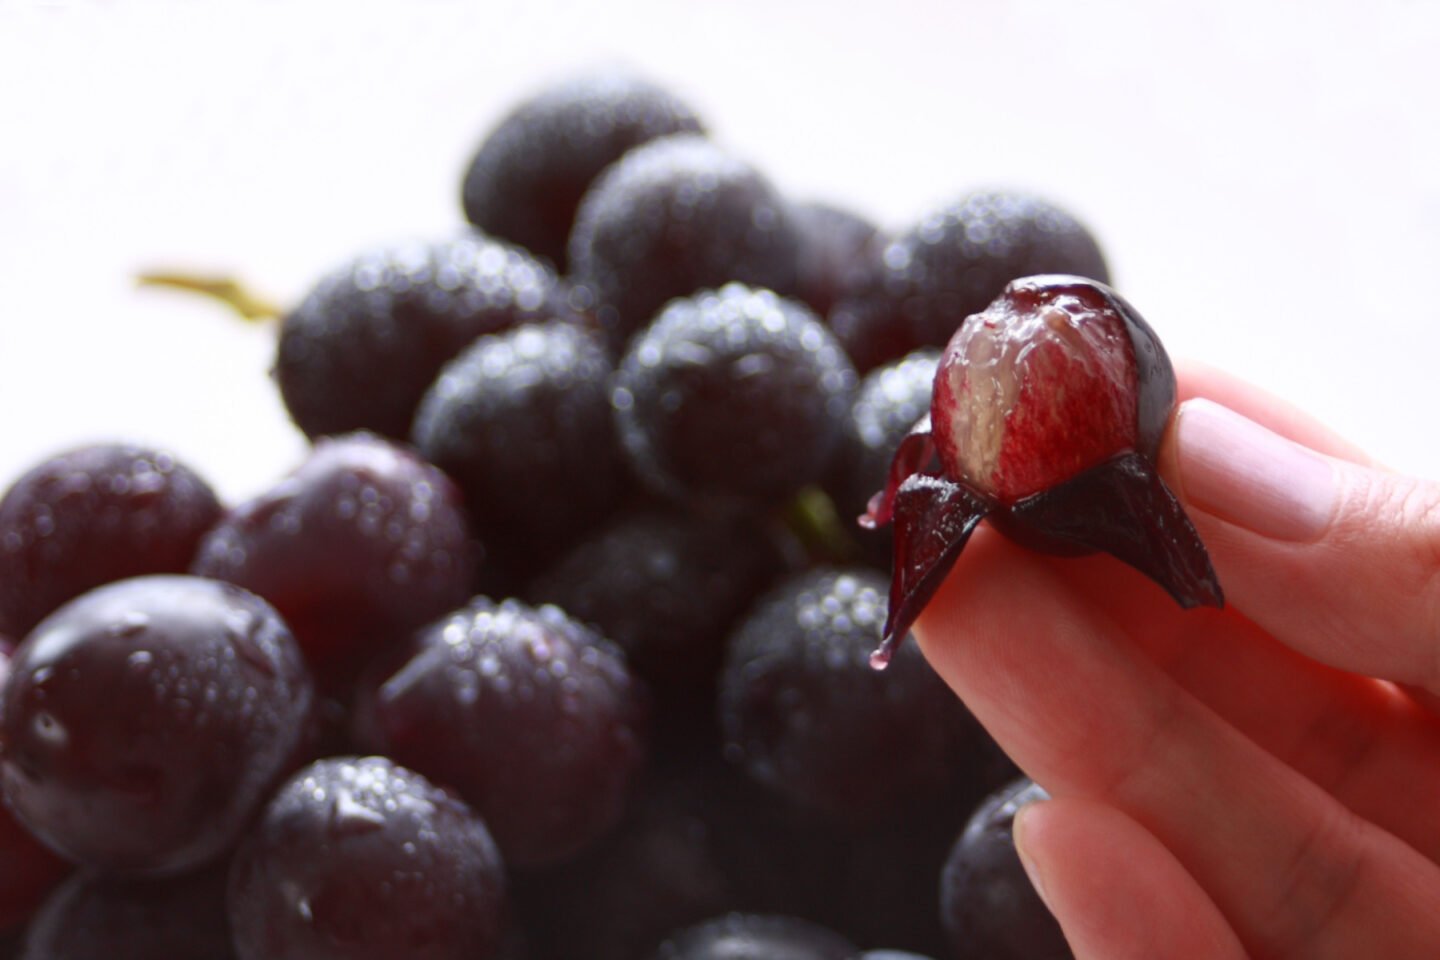 peeling the skin of grapes